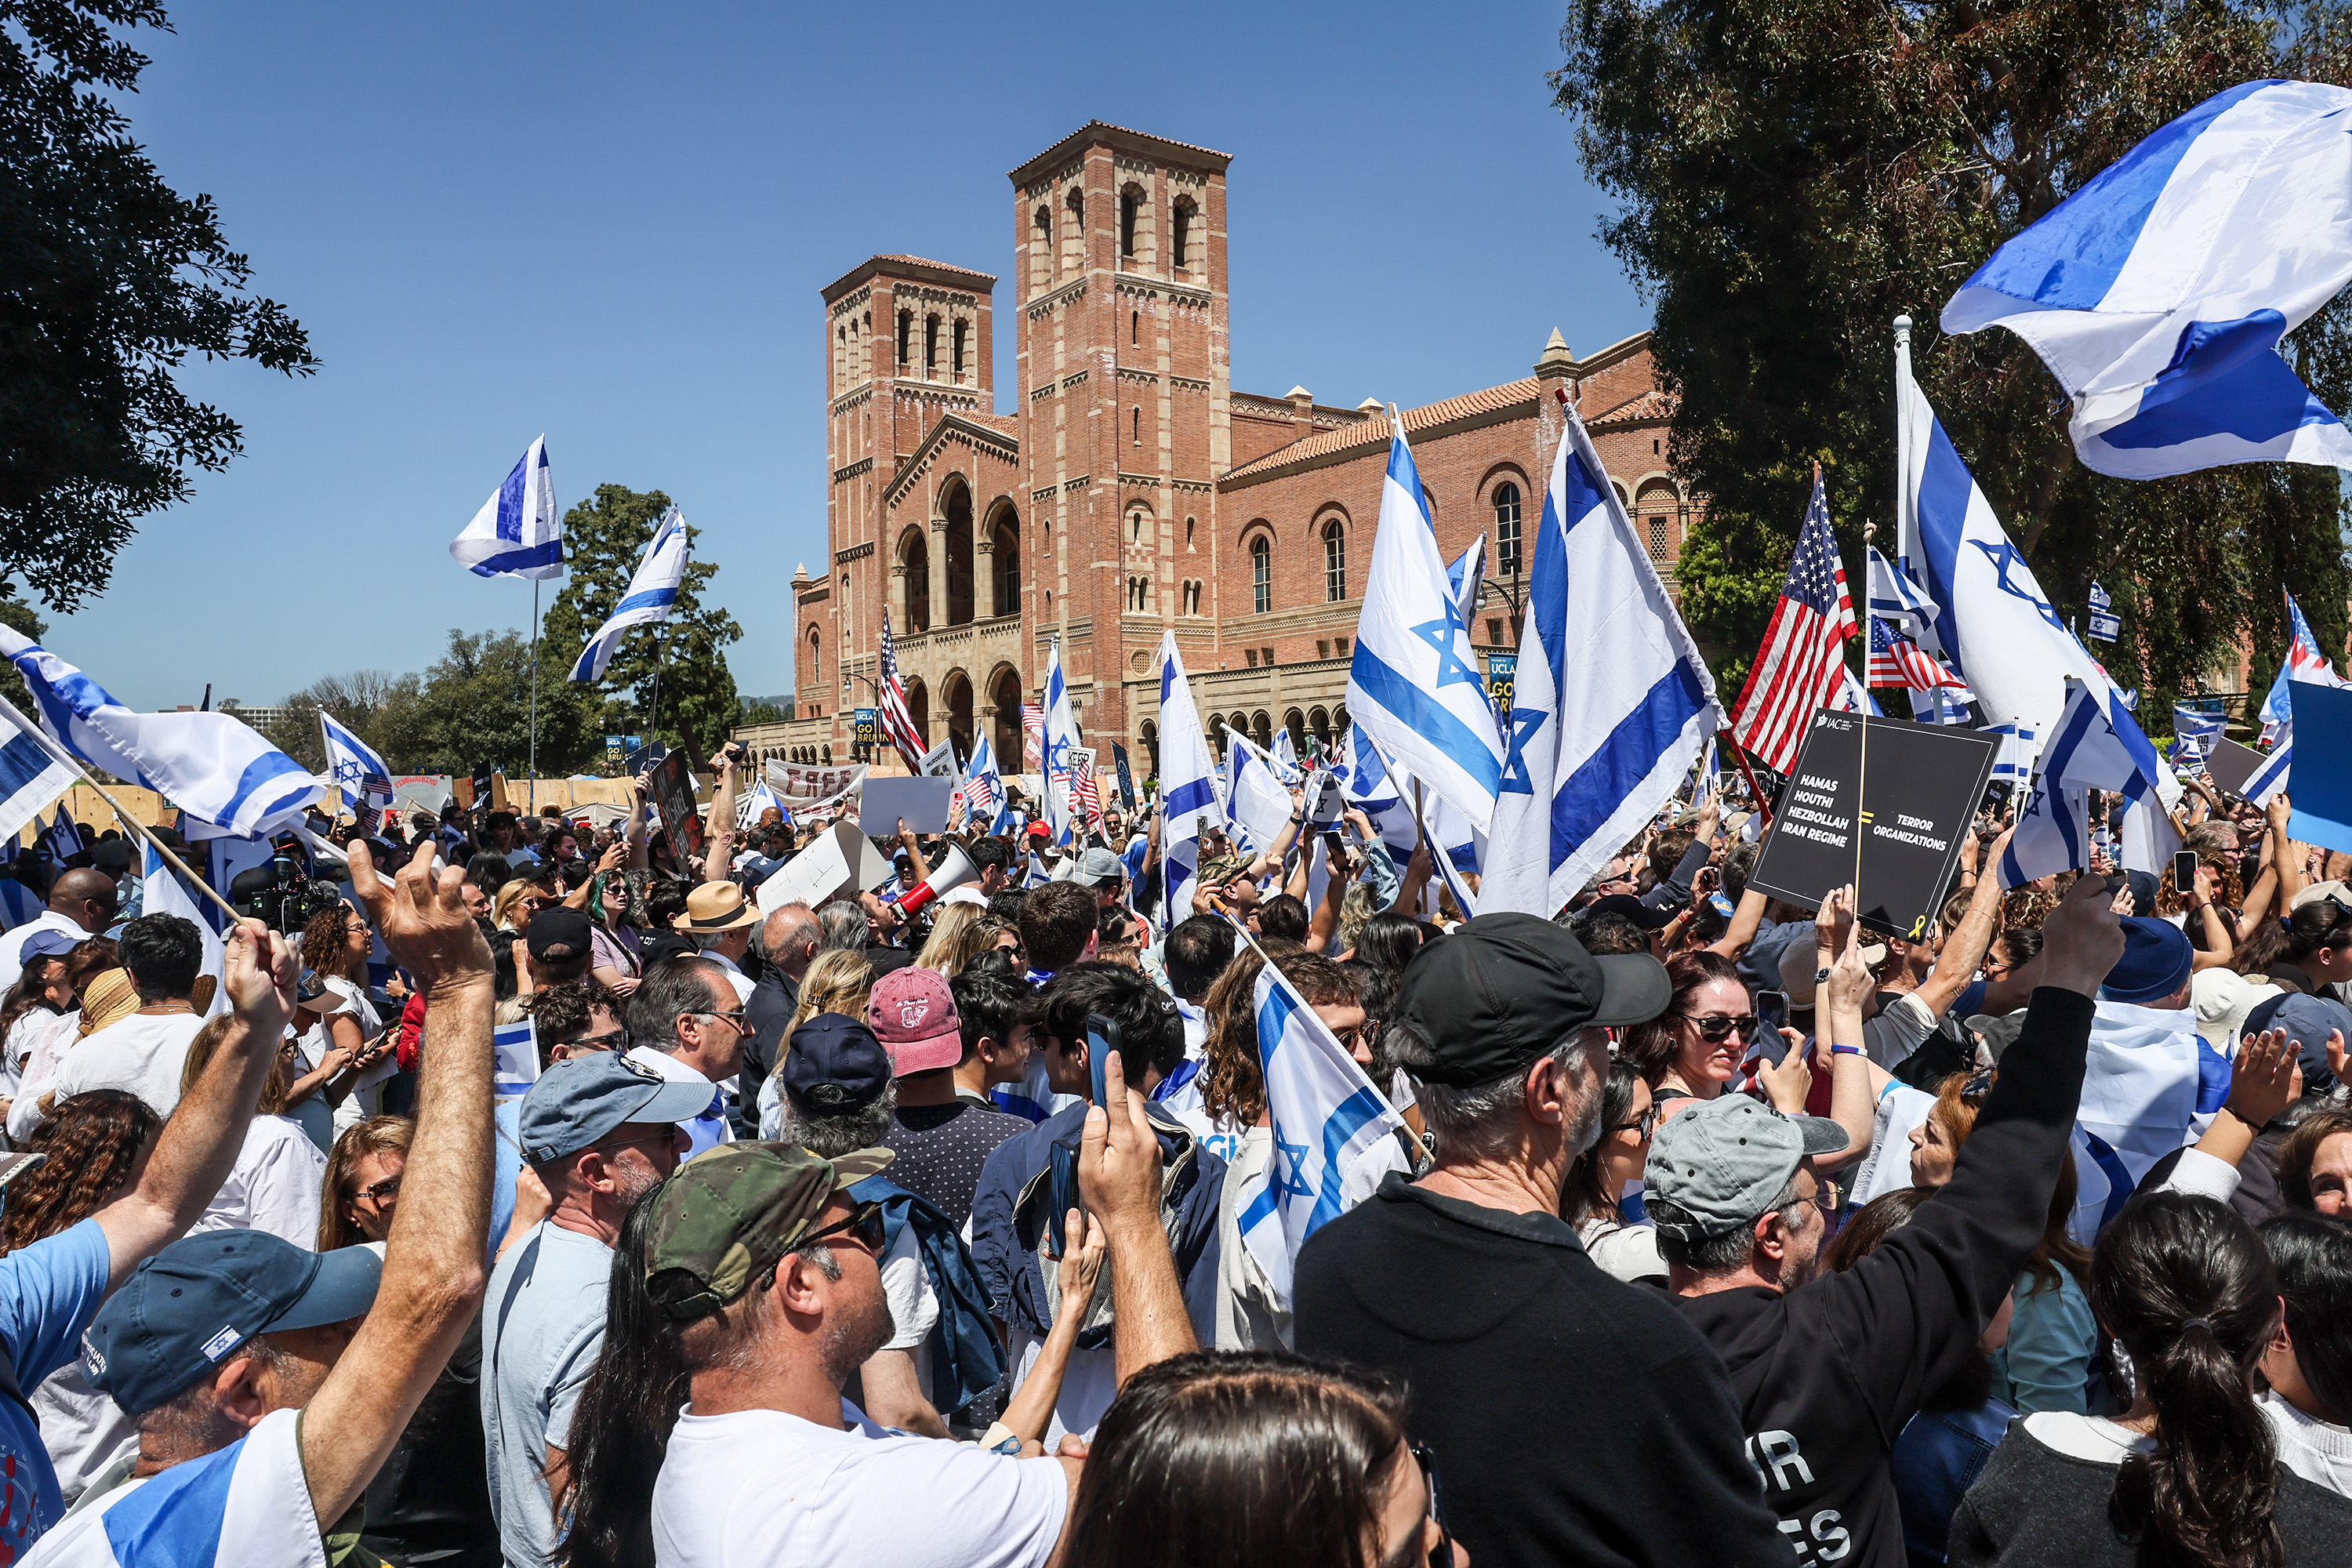 Photos: Pro-Israeli, pro-Palestinian demonstrations clash at UCLA